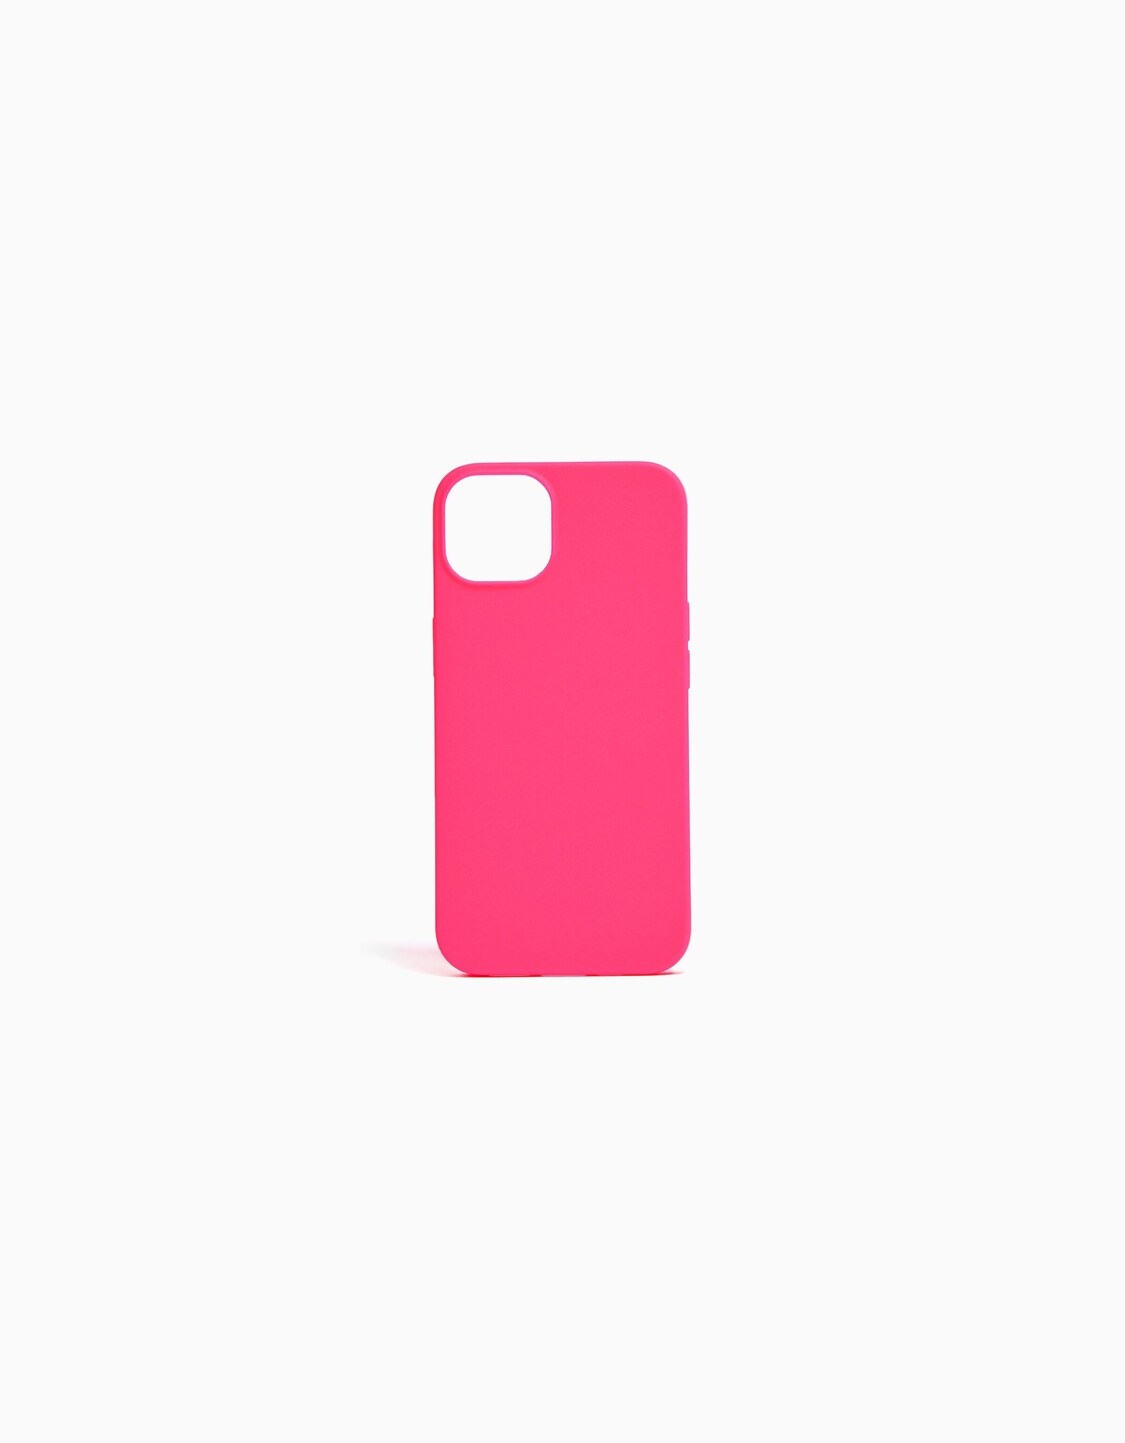 móvil iPhone colores - Accesorios - Mujer Bershka